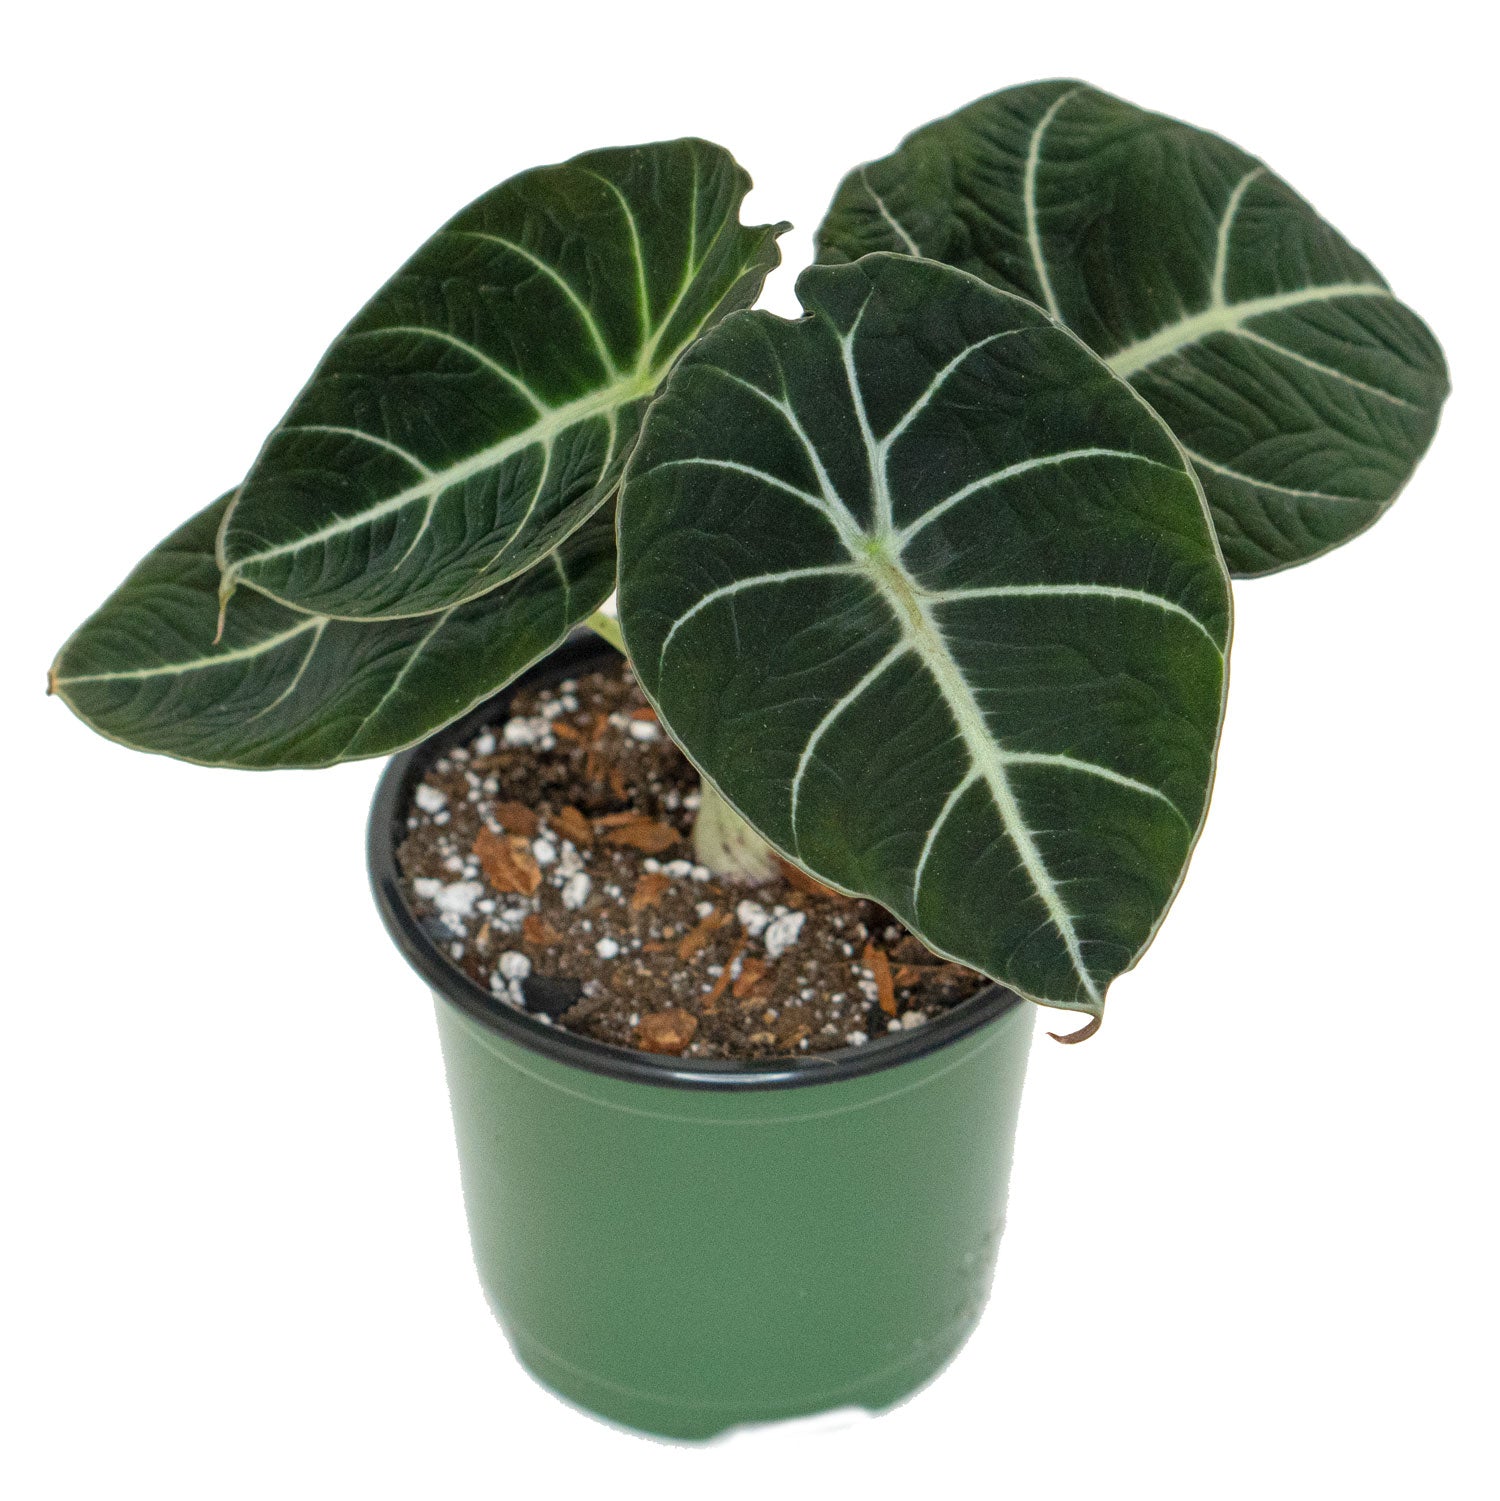 Potted rare plant Alocasia Black Velvet 4” Pot - Buy rare Alocasia Black Velvet at Planteia